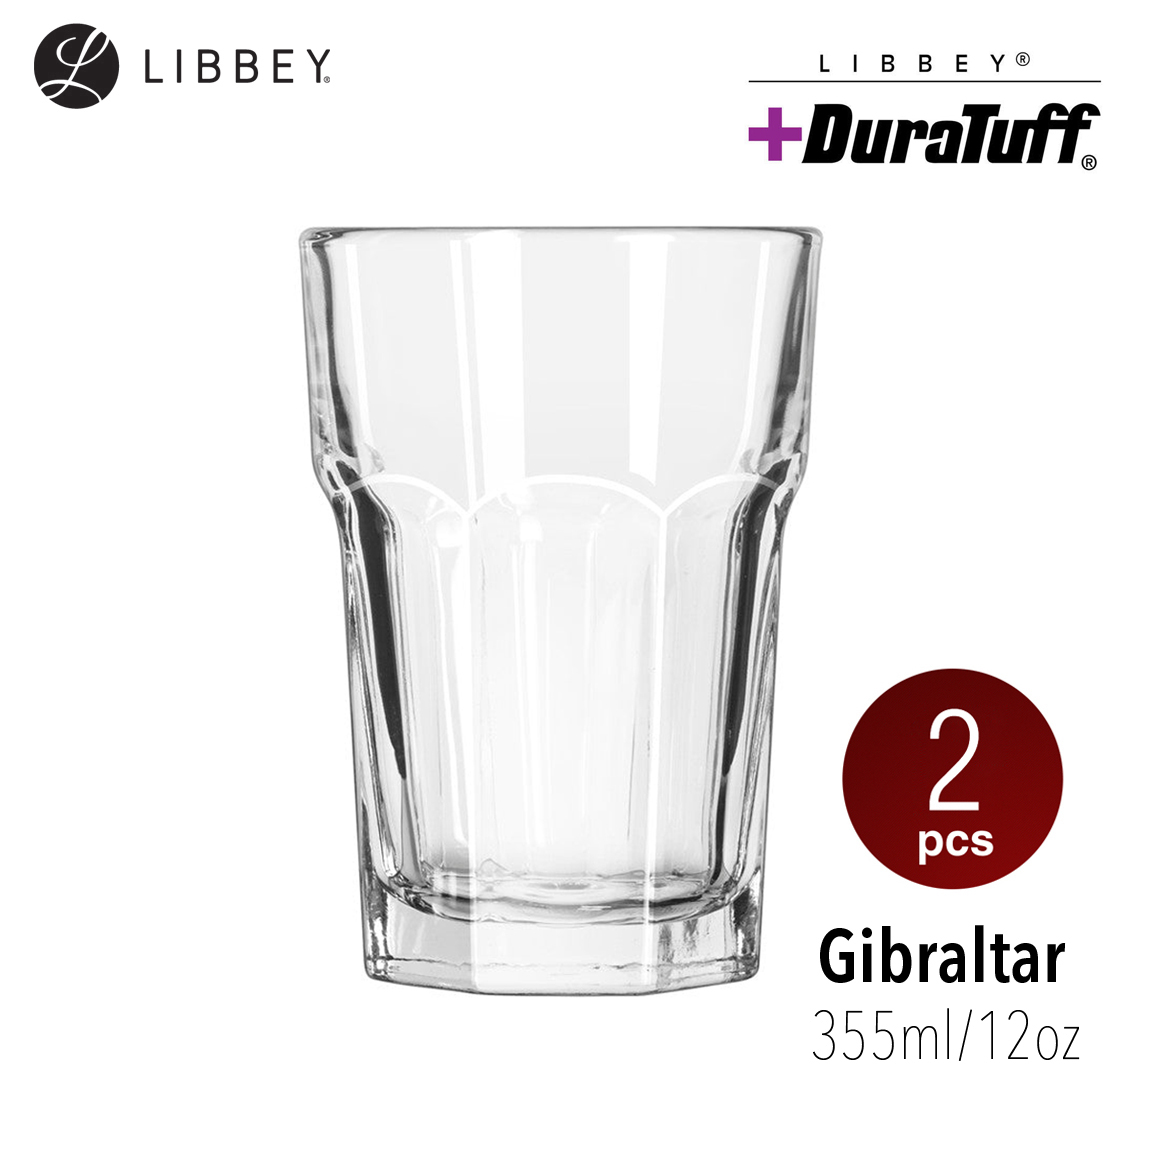 Libbey Gibraltar 15238 DuraTuff Glass Tumbler 355ml/12oz 2-pc Set